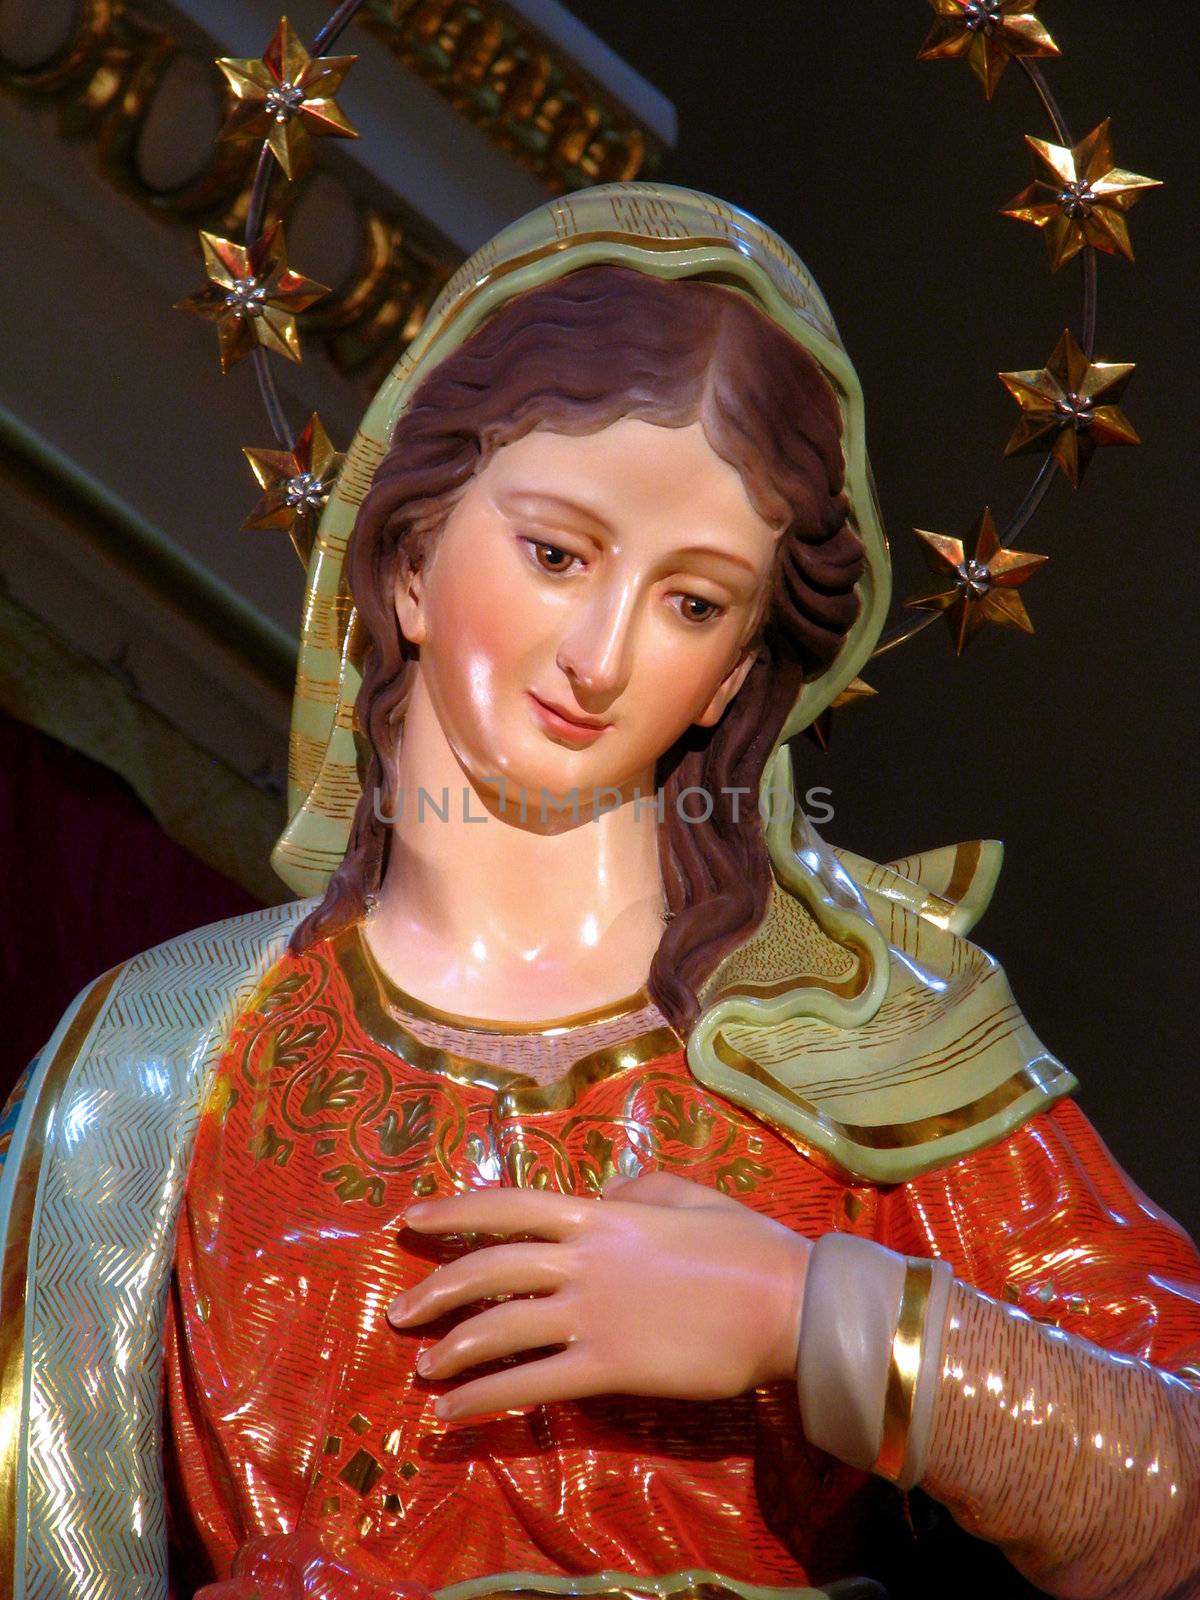 Hail Mary Full Of Grace by fajjenzu